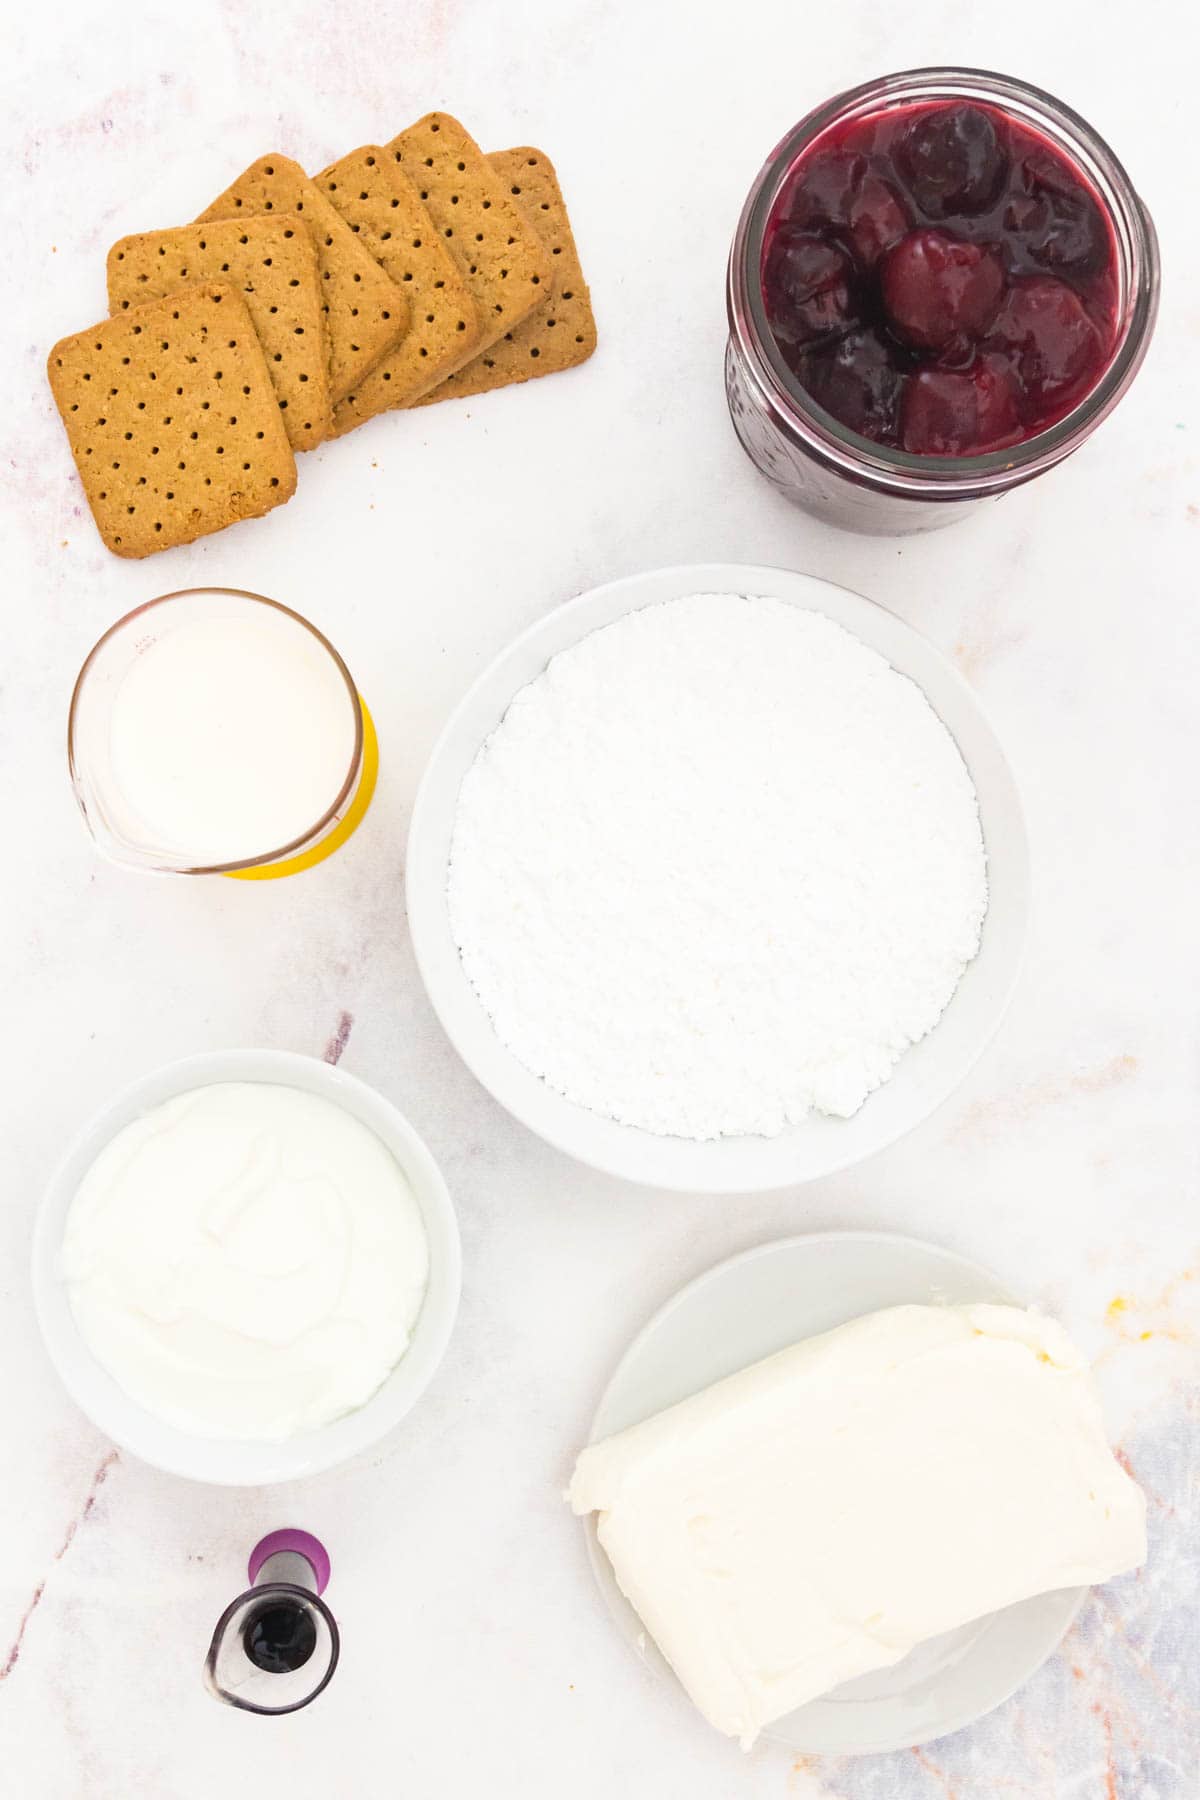 Ingredients for cherry cheesecake dip are shown in bowls: cream cheese, yogurt, crackers, sugar, cherries.